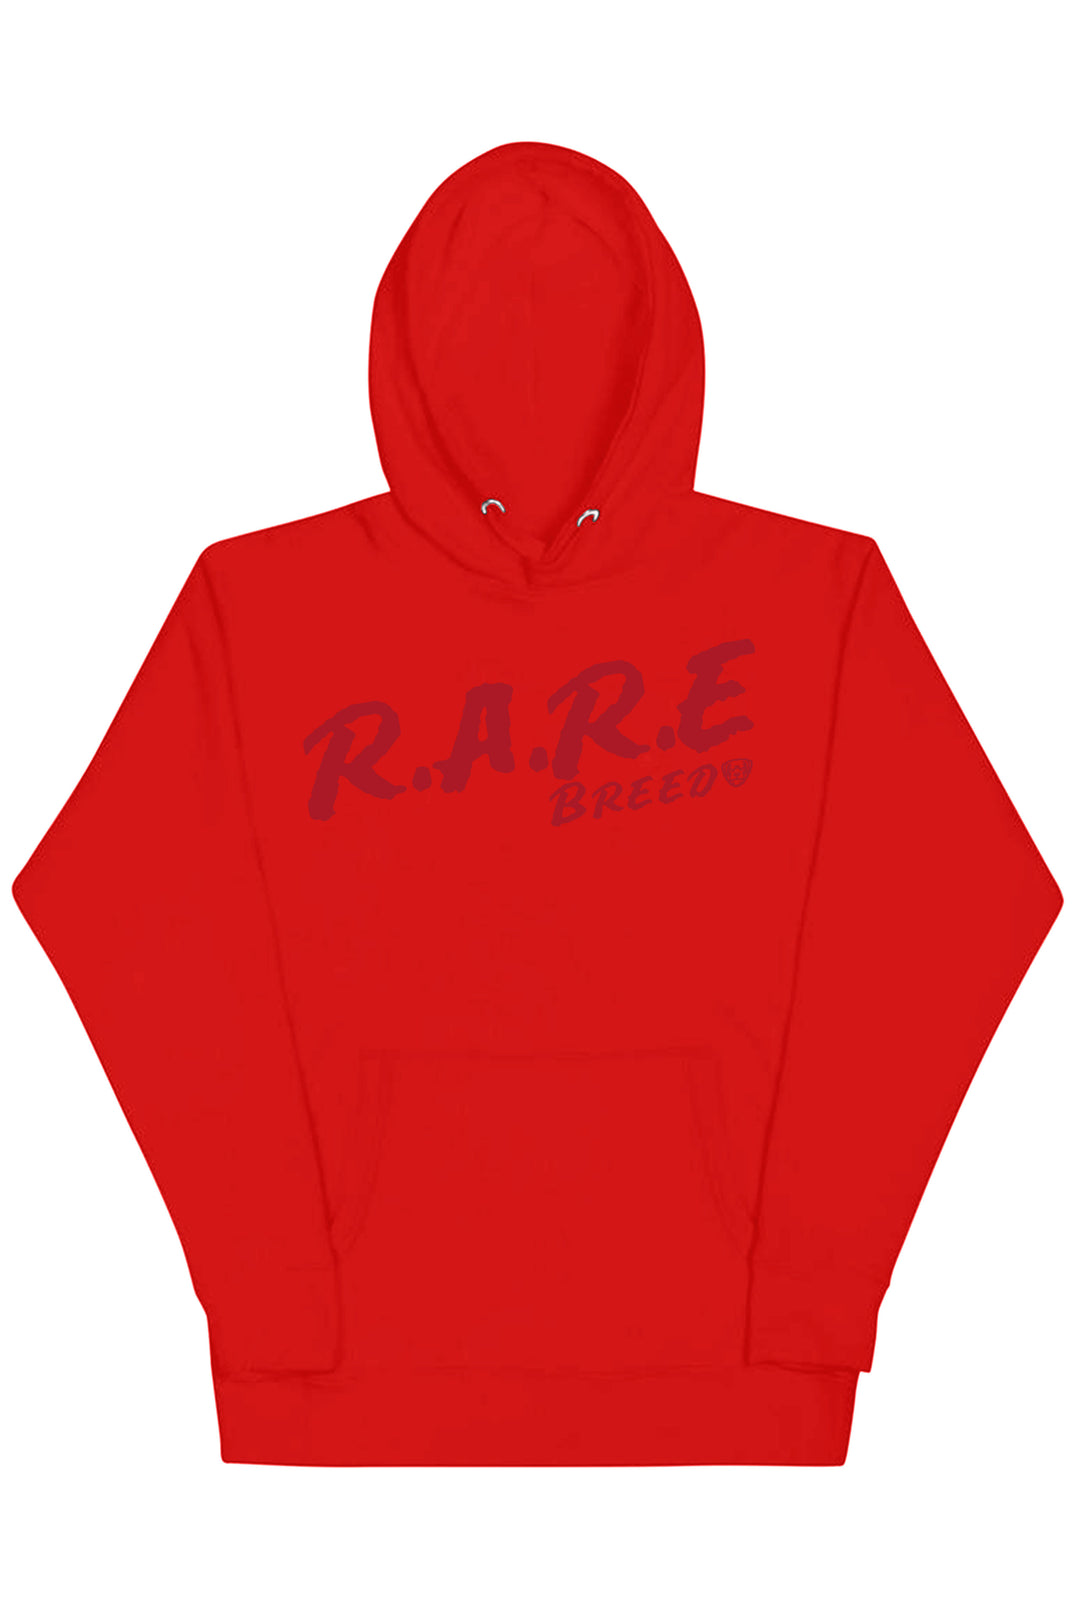 Rare Breed Hoodie (Red Logo) - Zamage